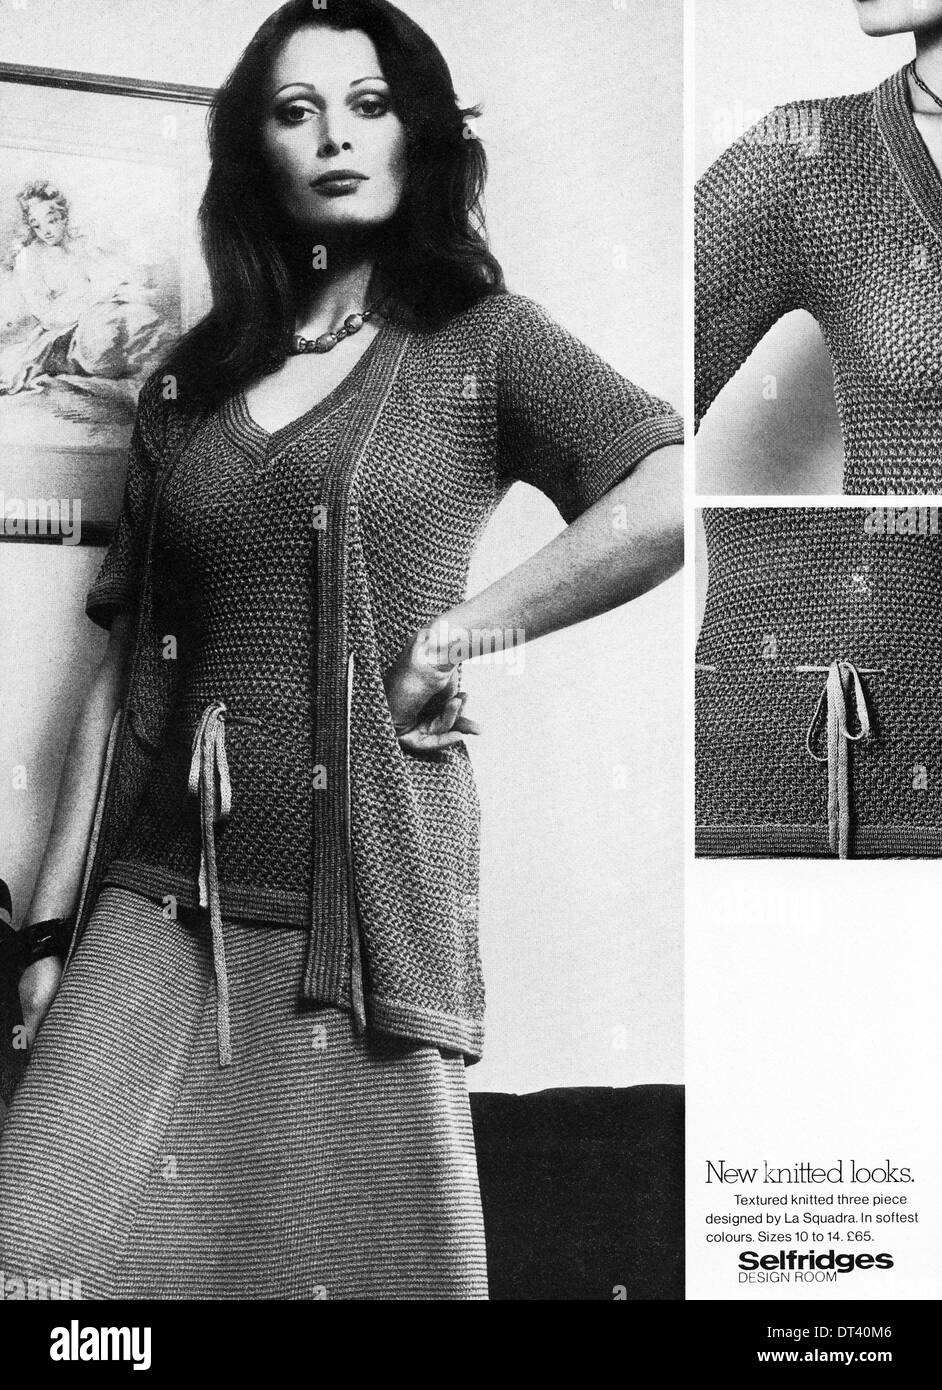 1970s fashion magazine advertisement advertising women's fashions at SELFRIDGES, advert circa 1975 Stock Photo